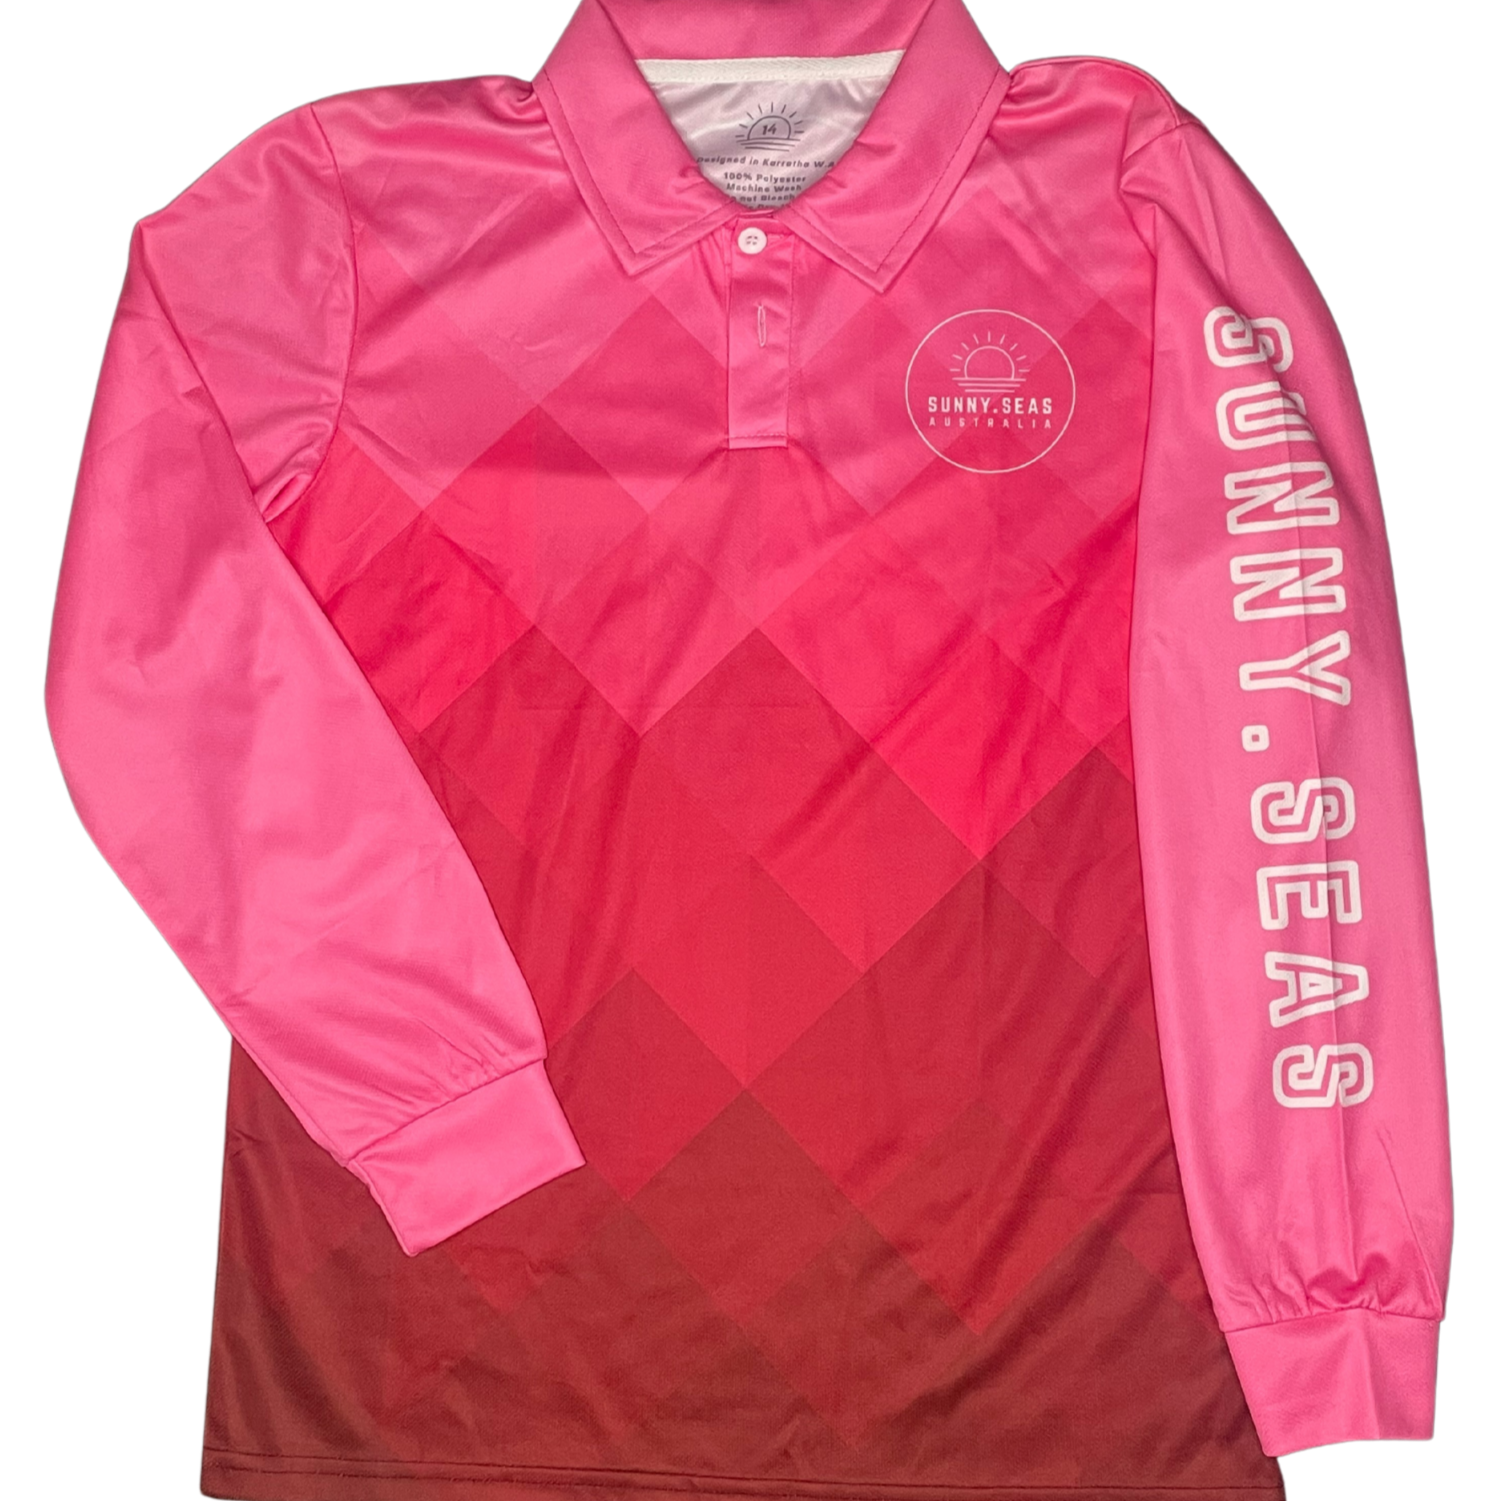 Argyle Pinks Adventure Shirt